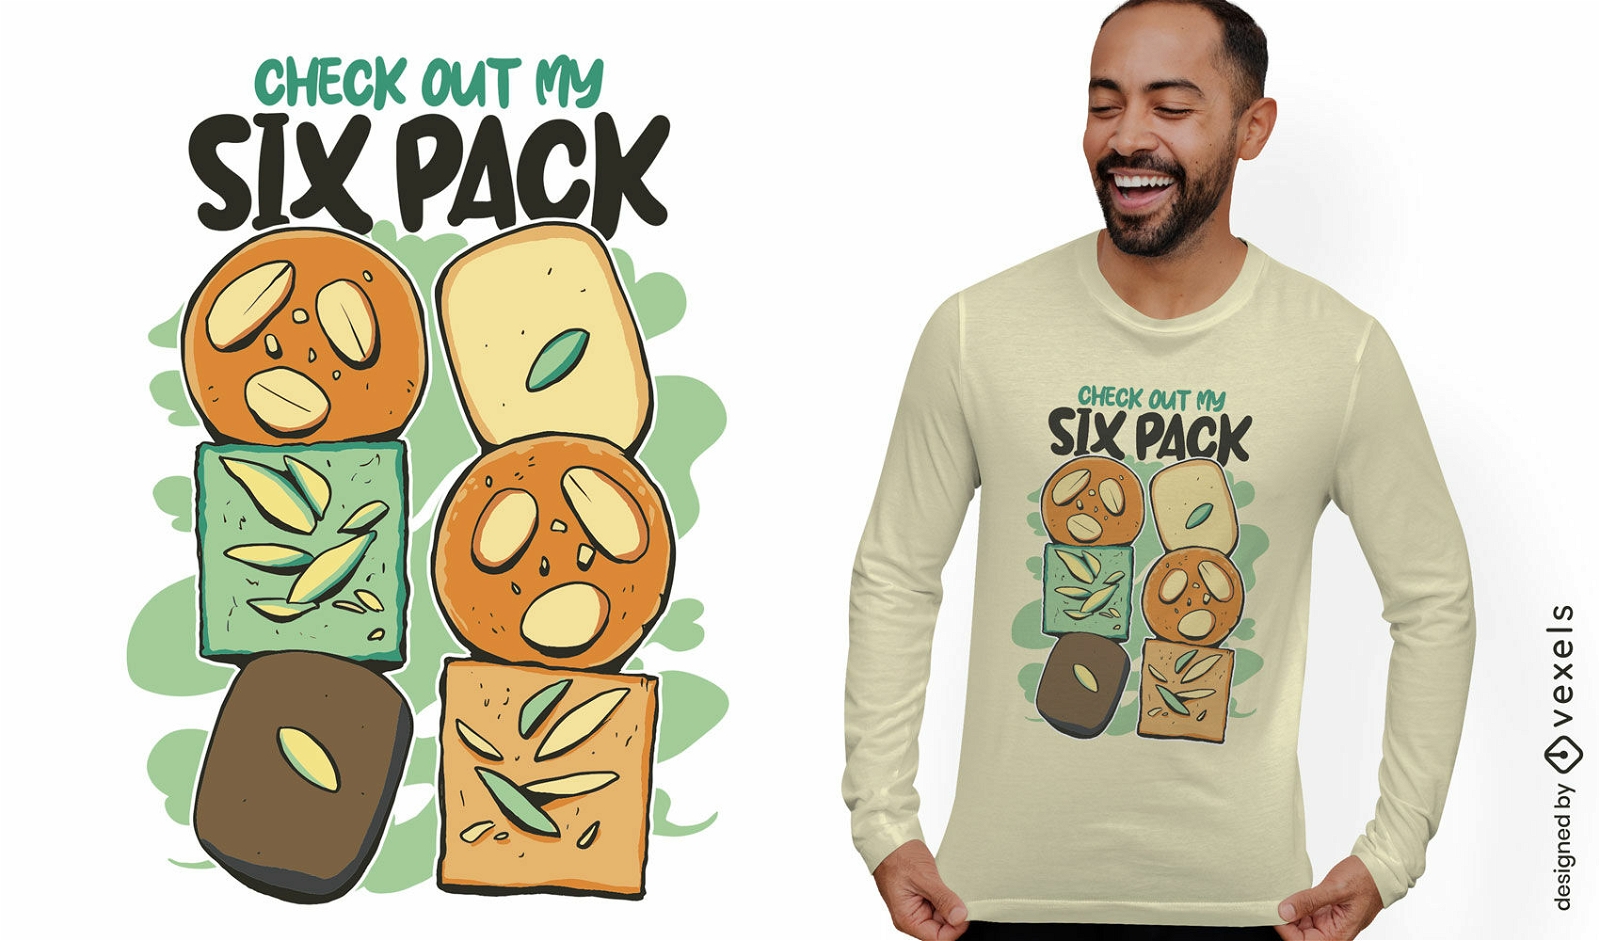 Sixpack-S??igkeiten-T-Shirt-Design